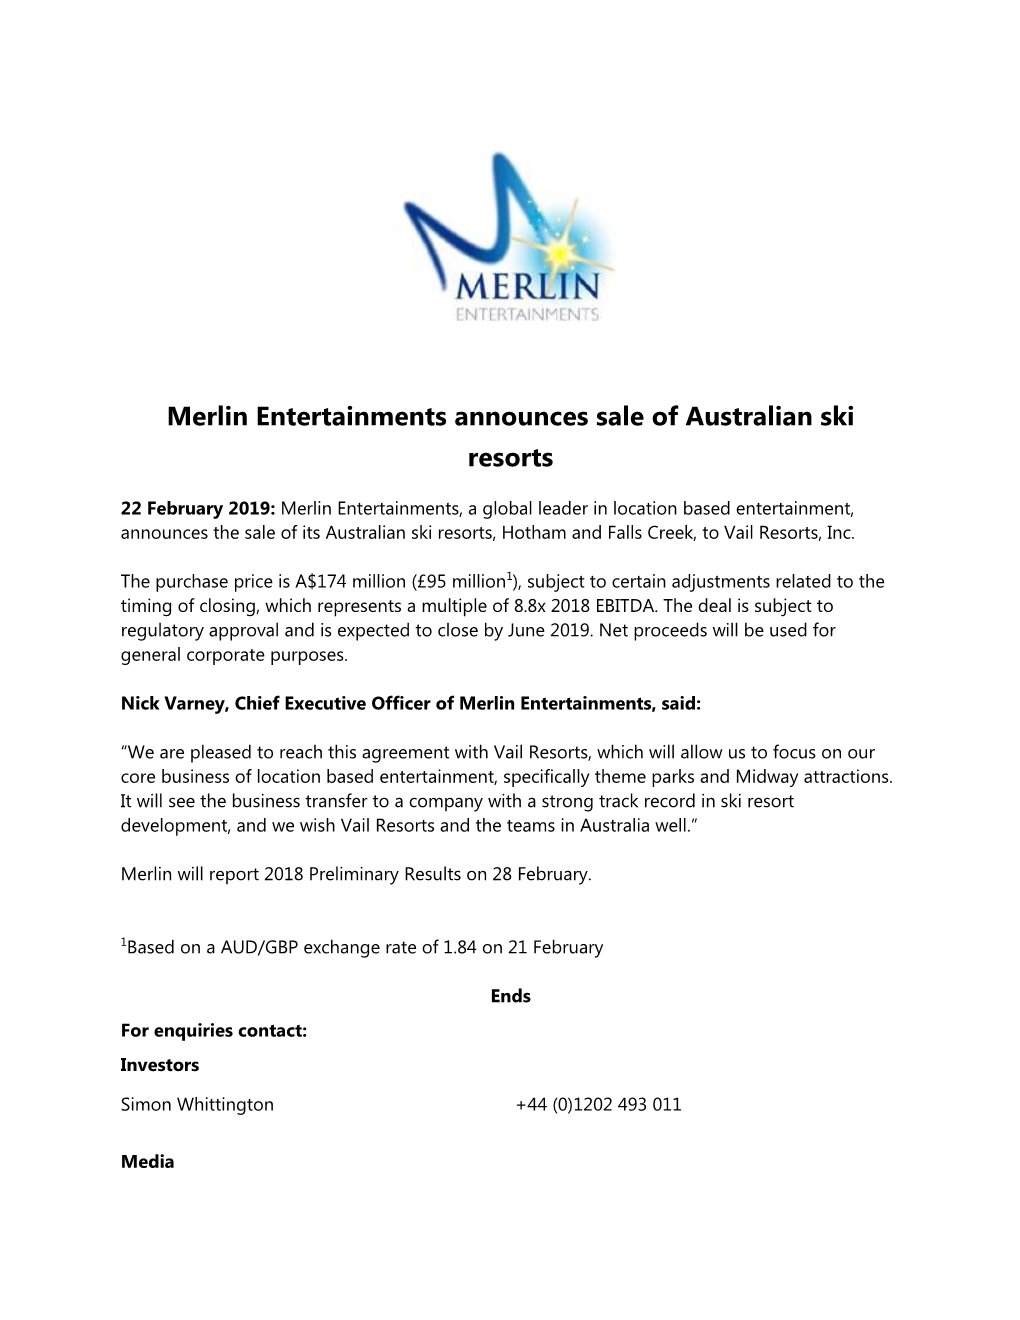 Merlin Entertainments Announces Sale of Australian Ski Resorts